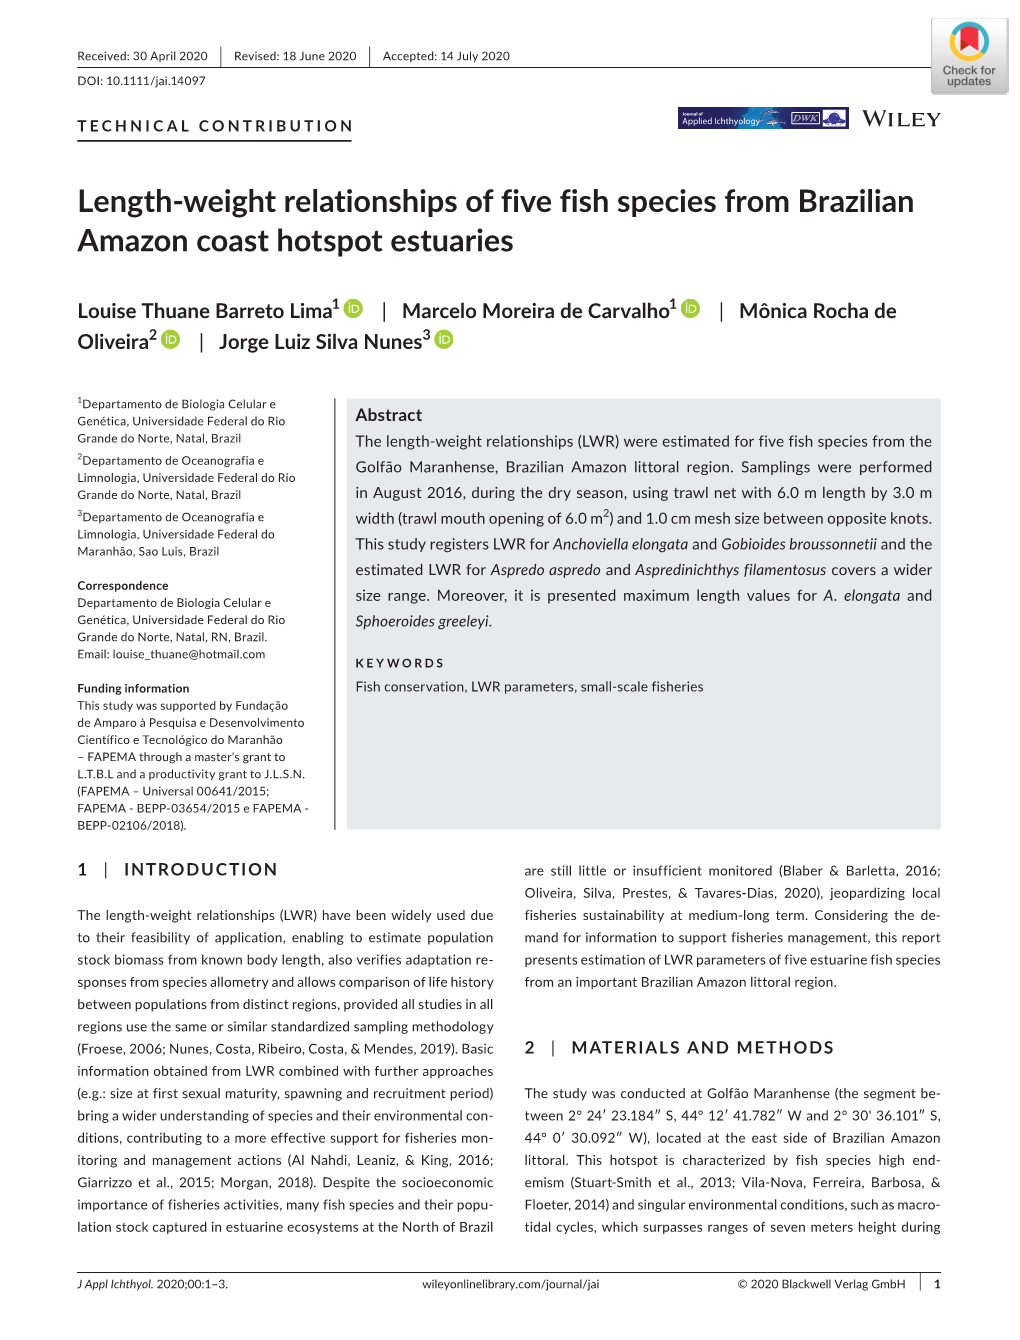 Length‐Weight Relationships of Five Fish Species from Brazilian Amazon Coast Hotspot Estuaries